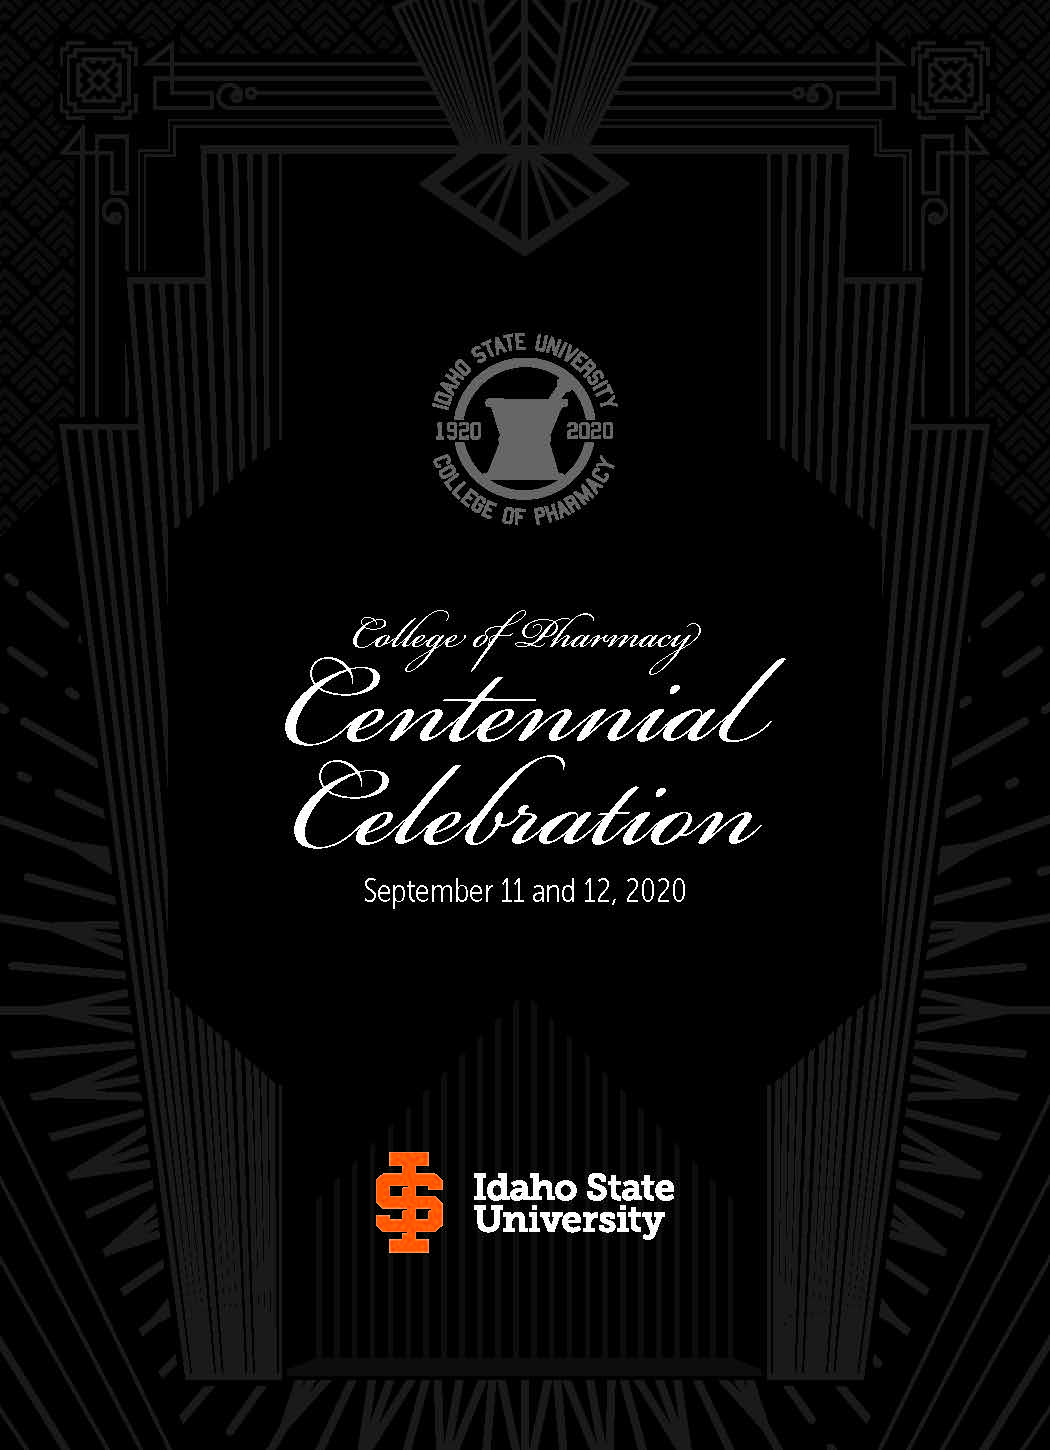 1920 to 2020, College of Pharmacy Centennial Celebration, September 11 & 12, 2020, Idaho State University